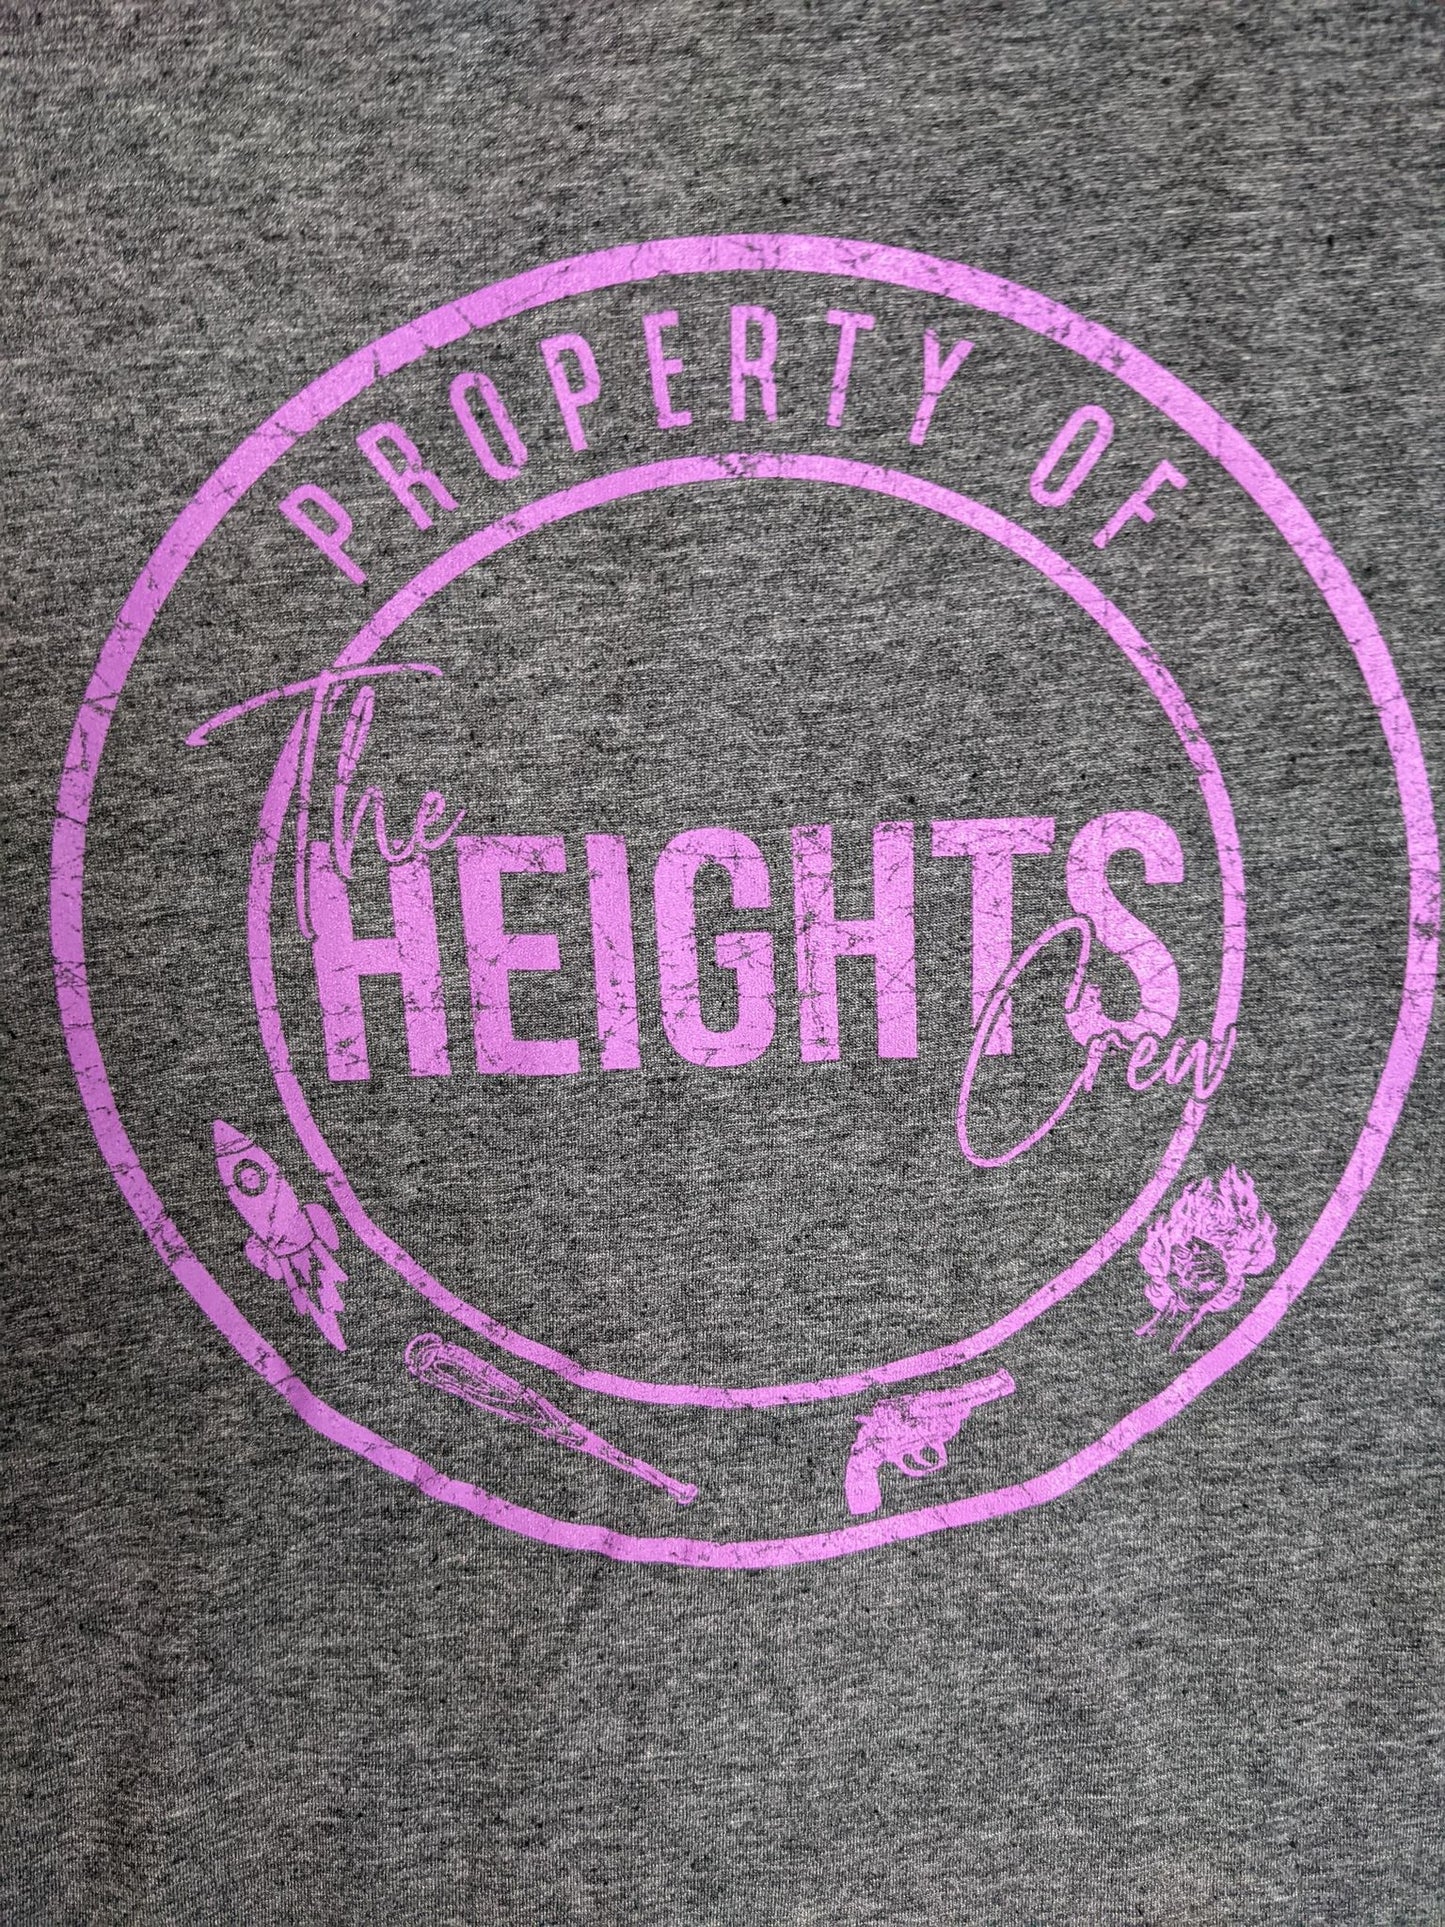 Heights Crew t-shirt